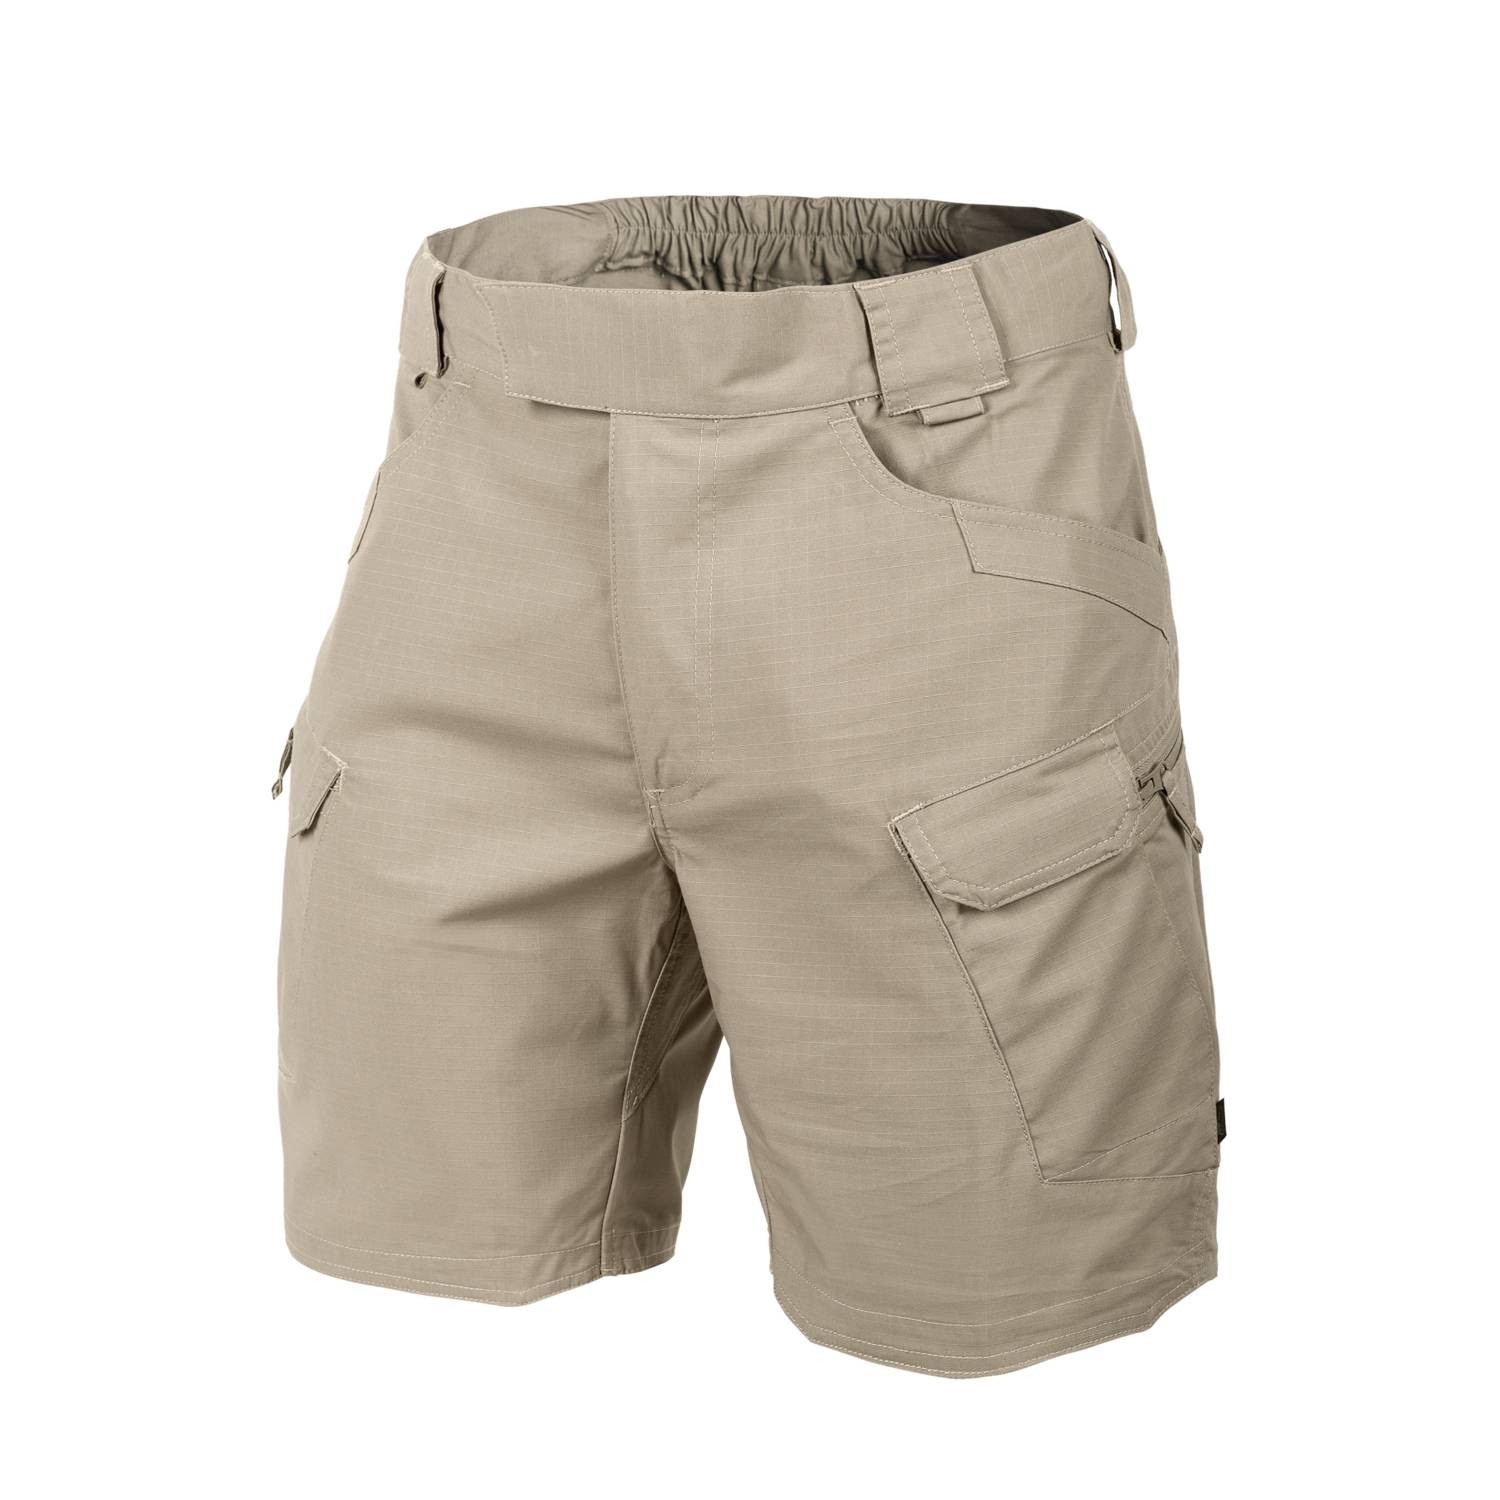 Short Pant For Summer